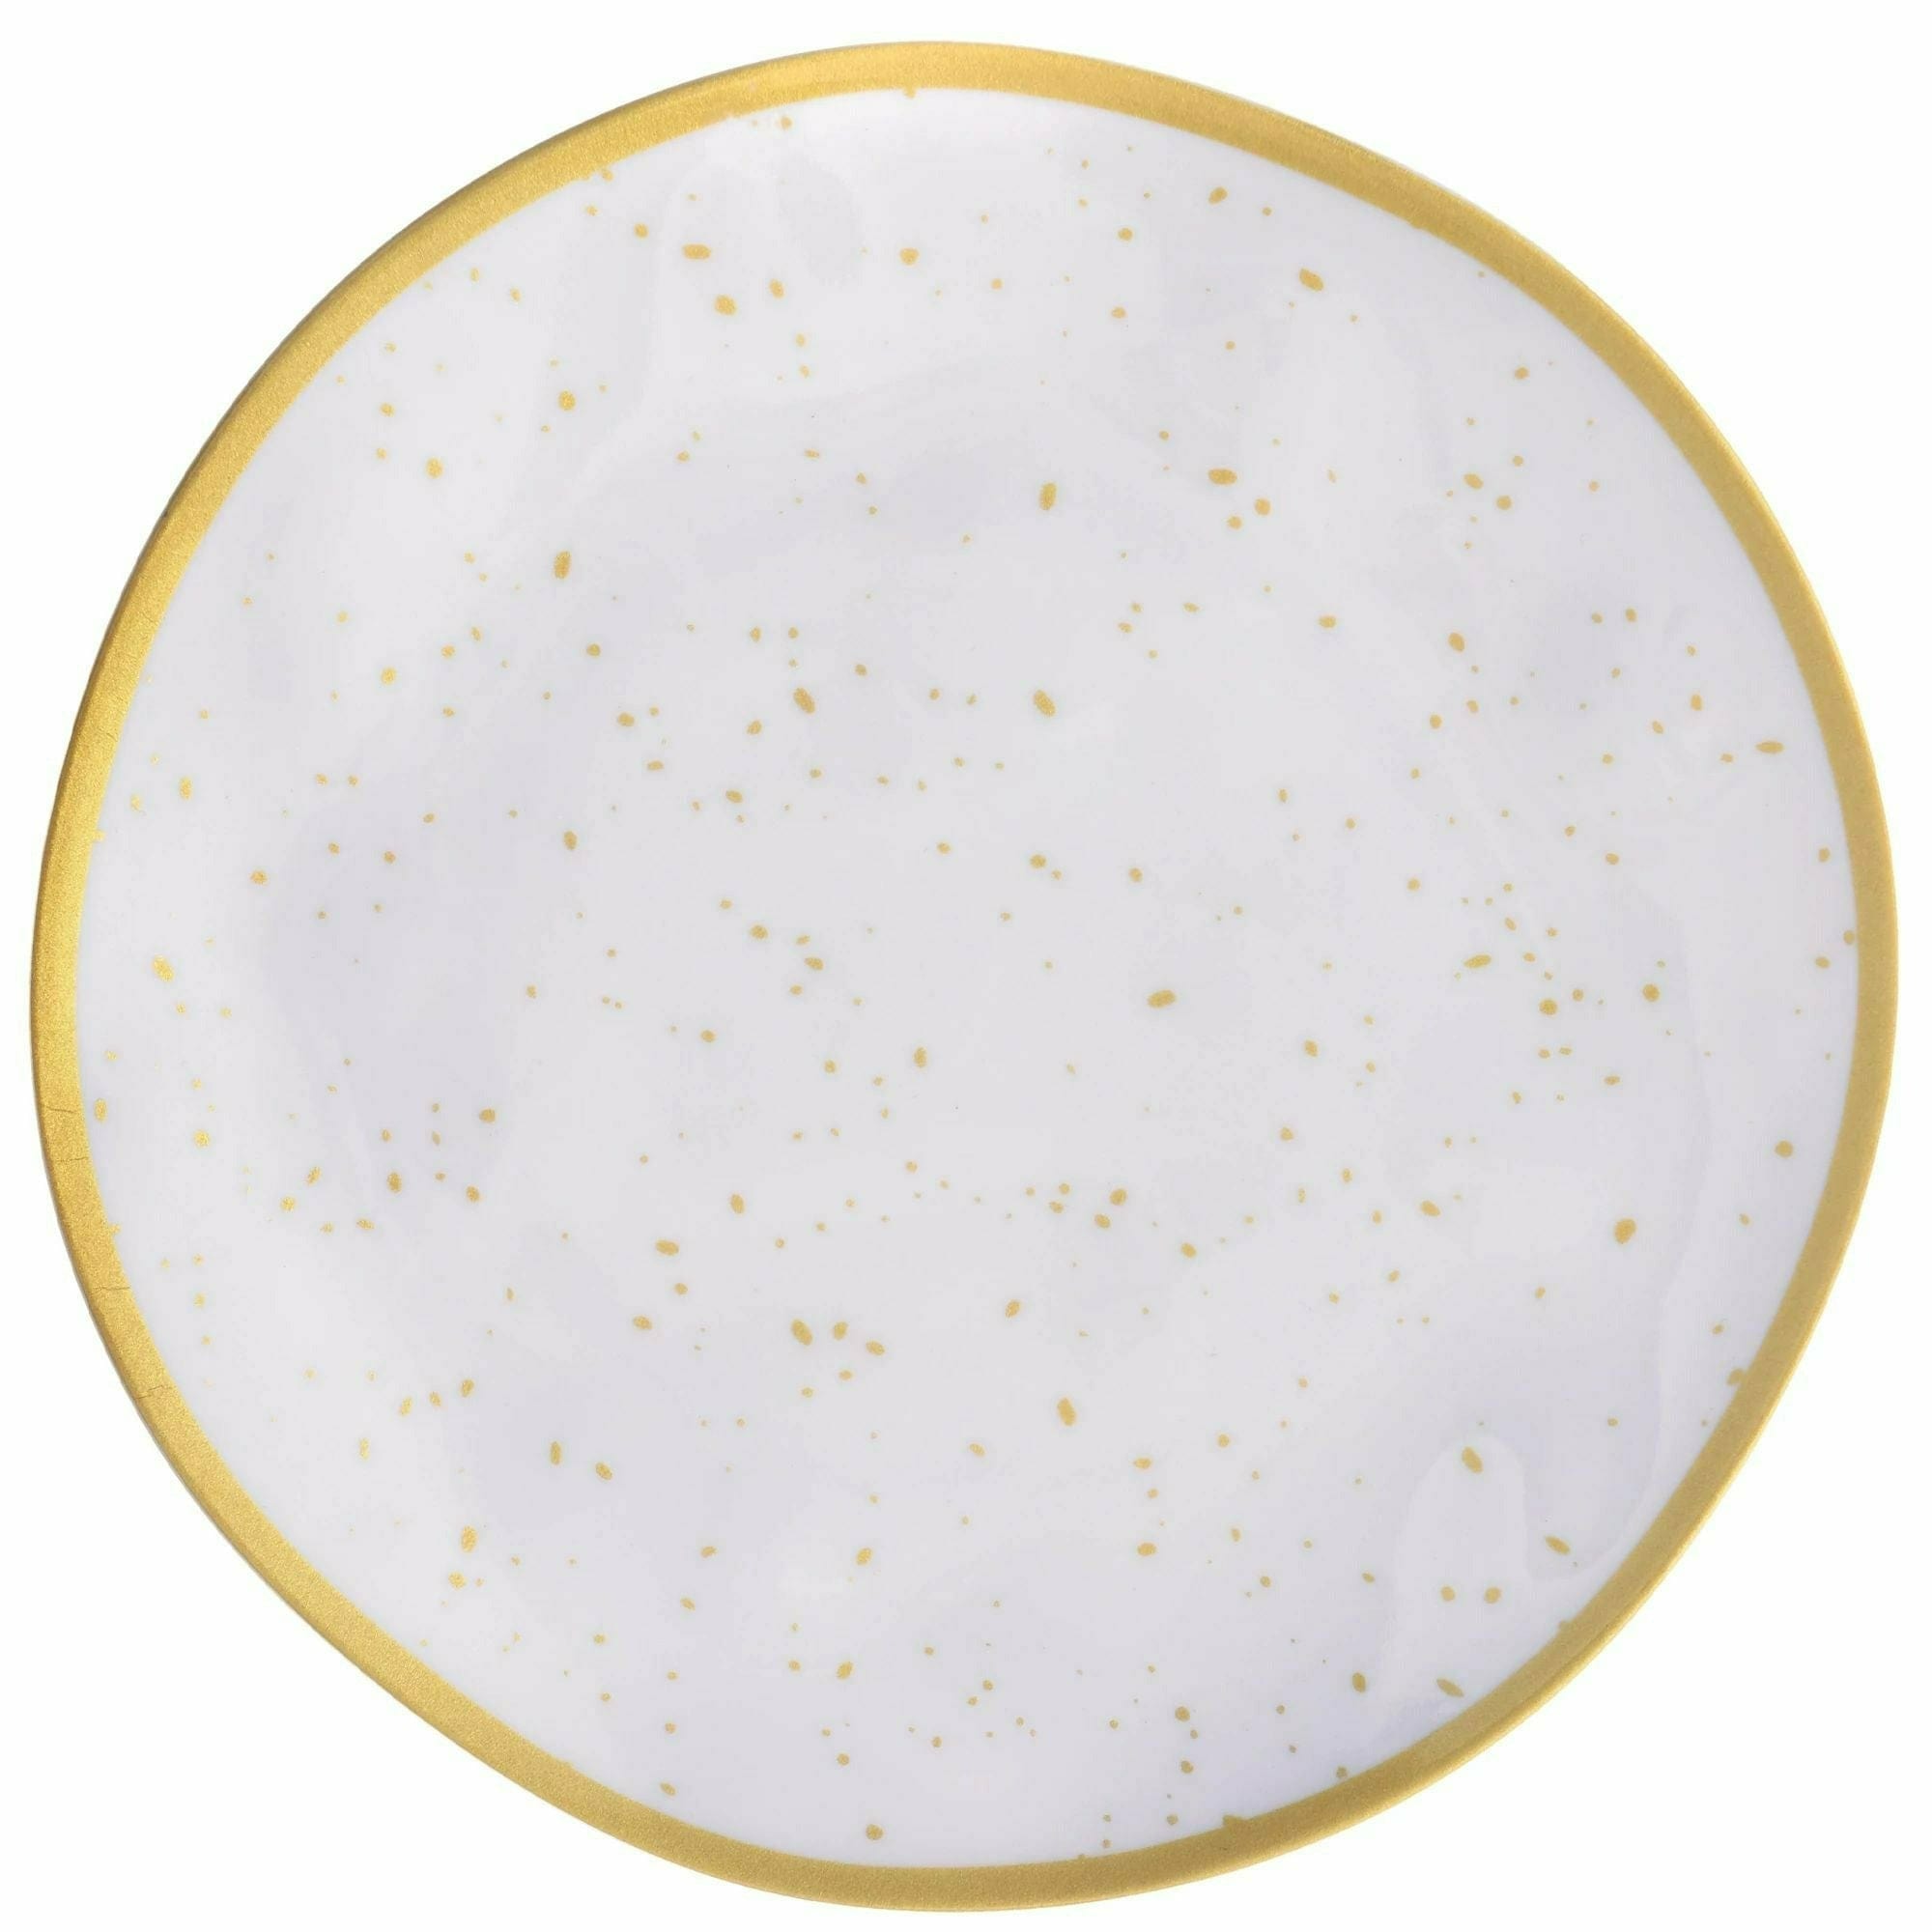 Amscan BASIC Appetizer Plastic Plate, 6 1/4" - Gold